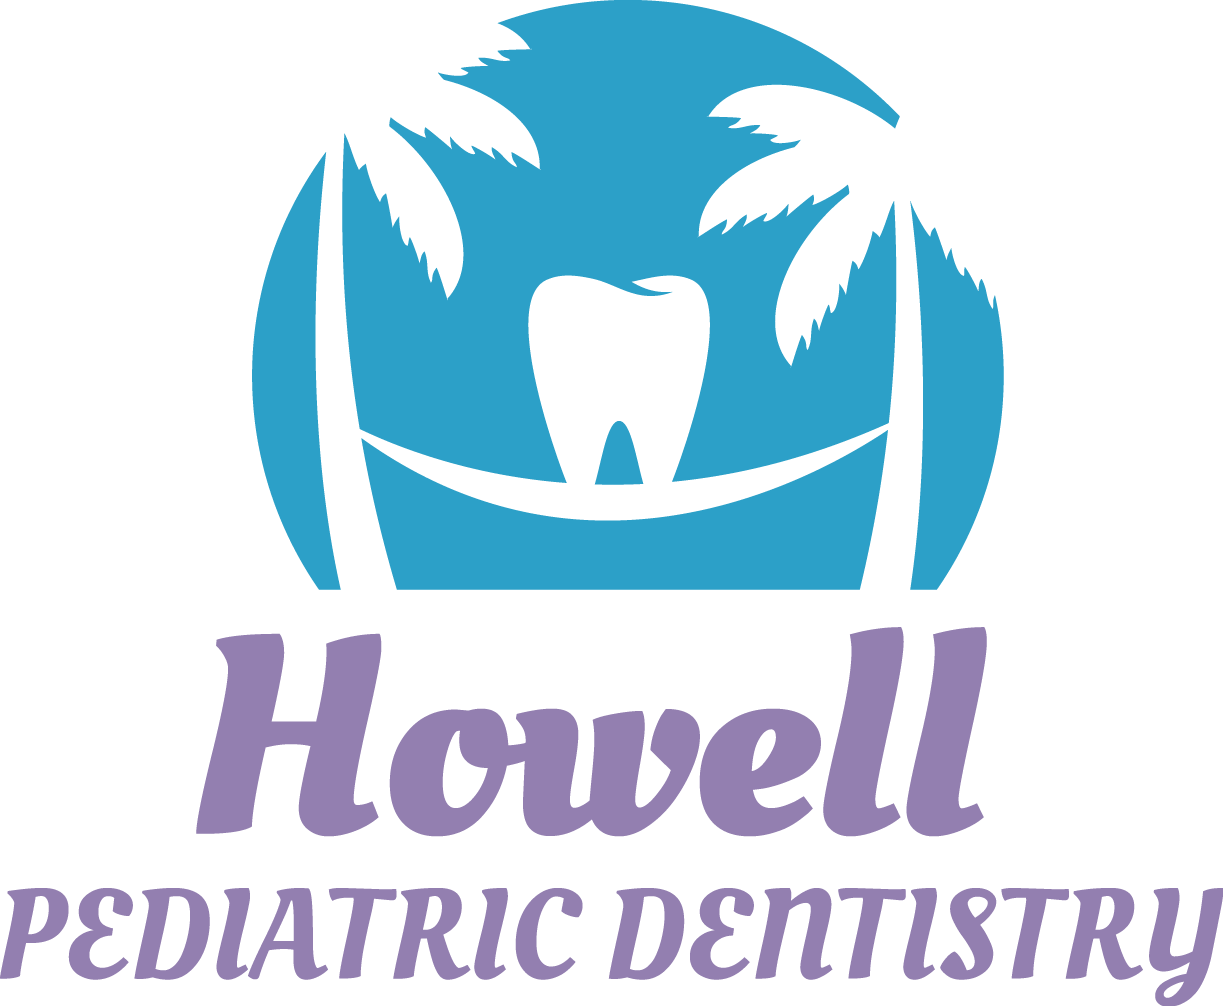 Howell Pediatric